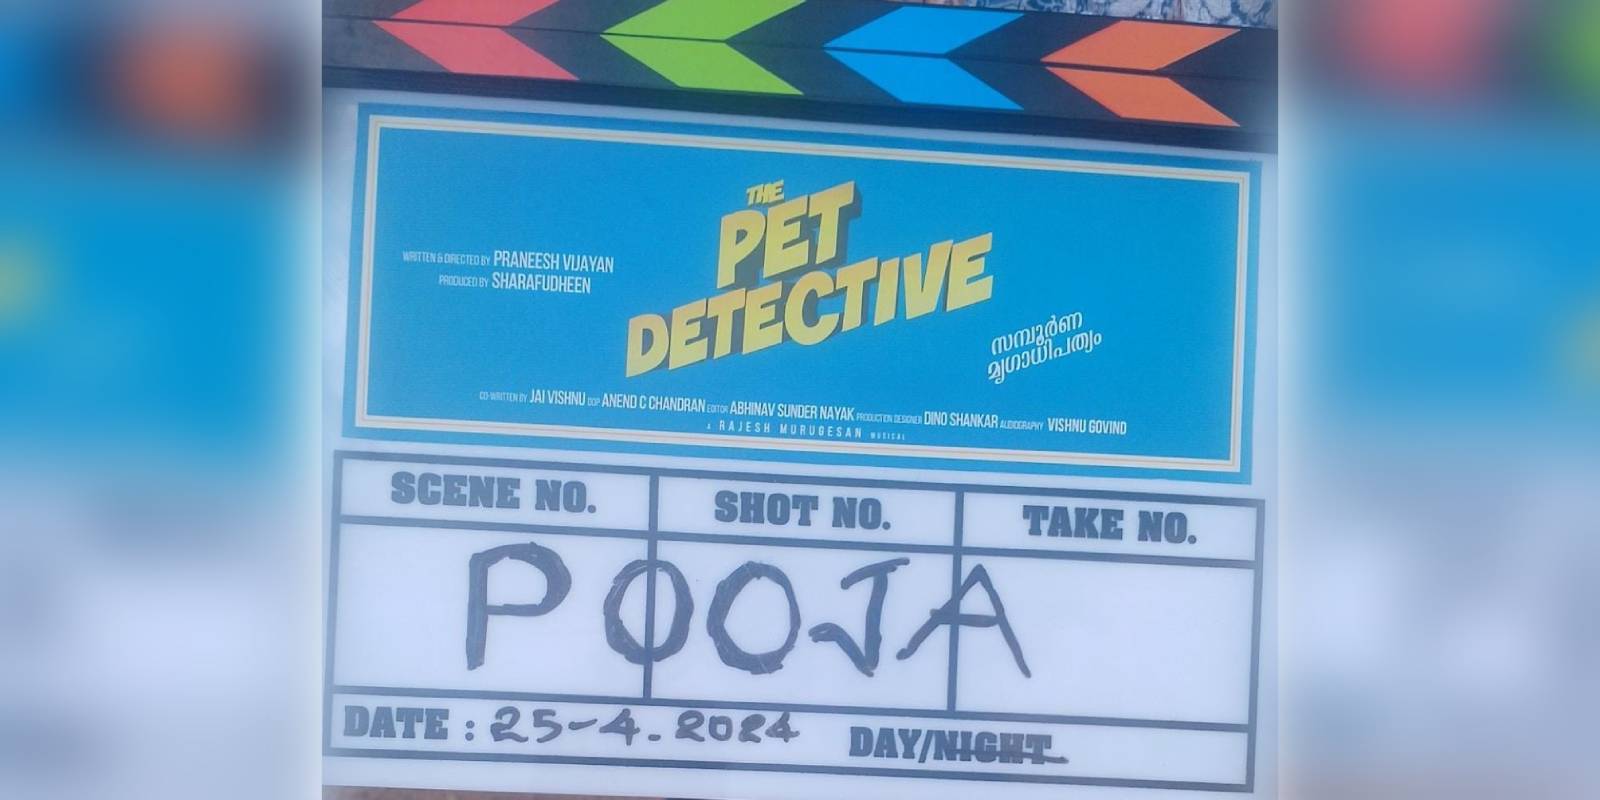 The Pet Detective shooting begins